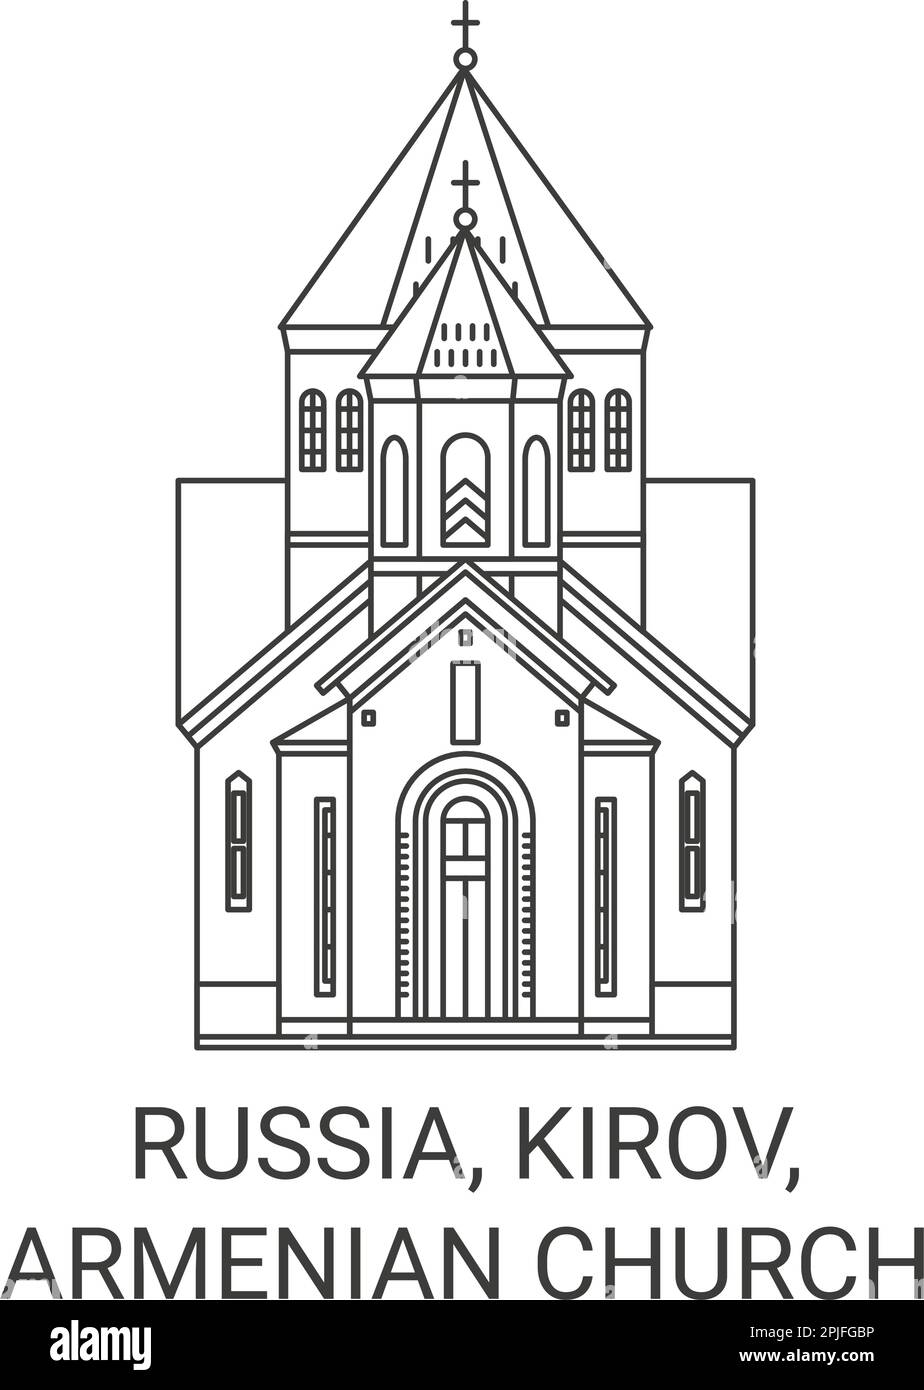 Russia, Kirov, Armenian Church travel landmark vector illustration Stock Vector